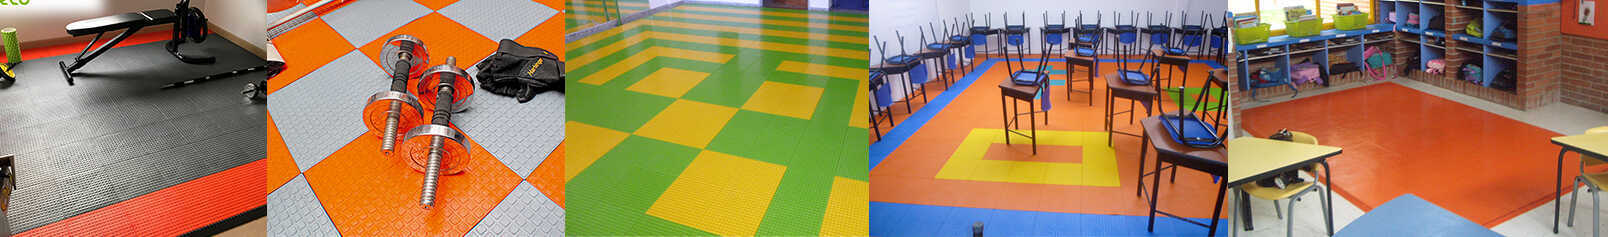 piso de colores modulares resistentes gimnasio acento suministros